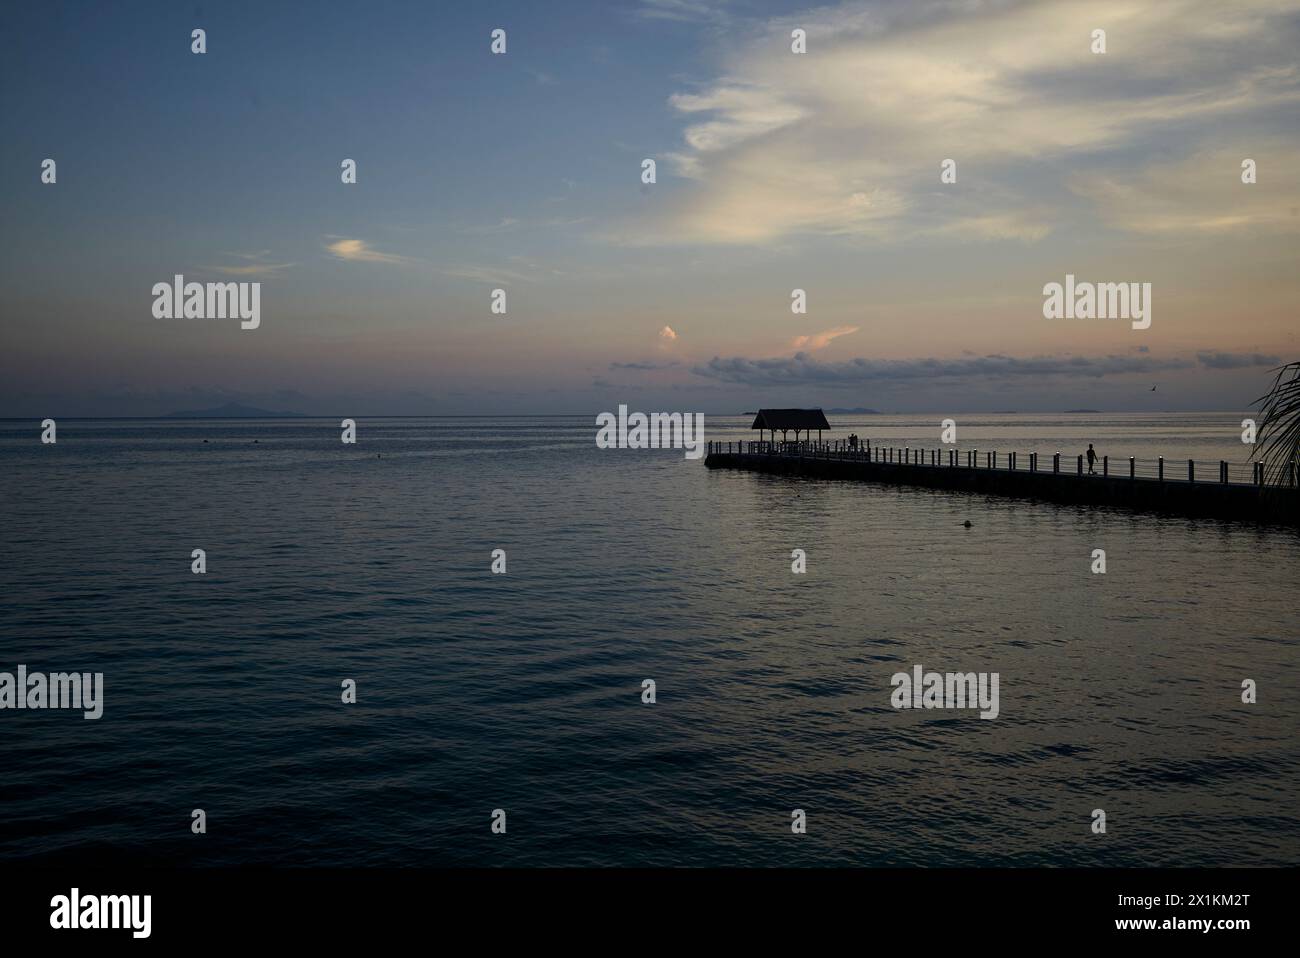 John Angerson 2024 Tioman Island, Malaysia, Stock Photo